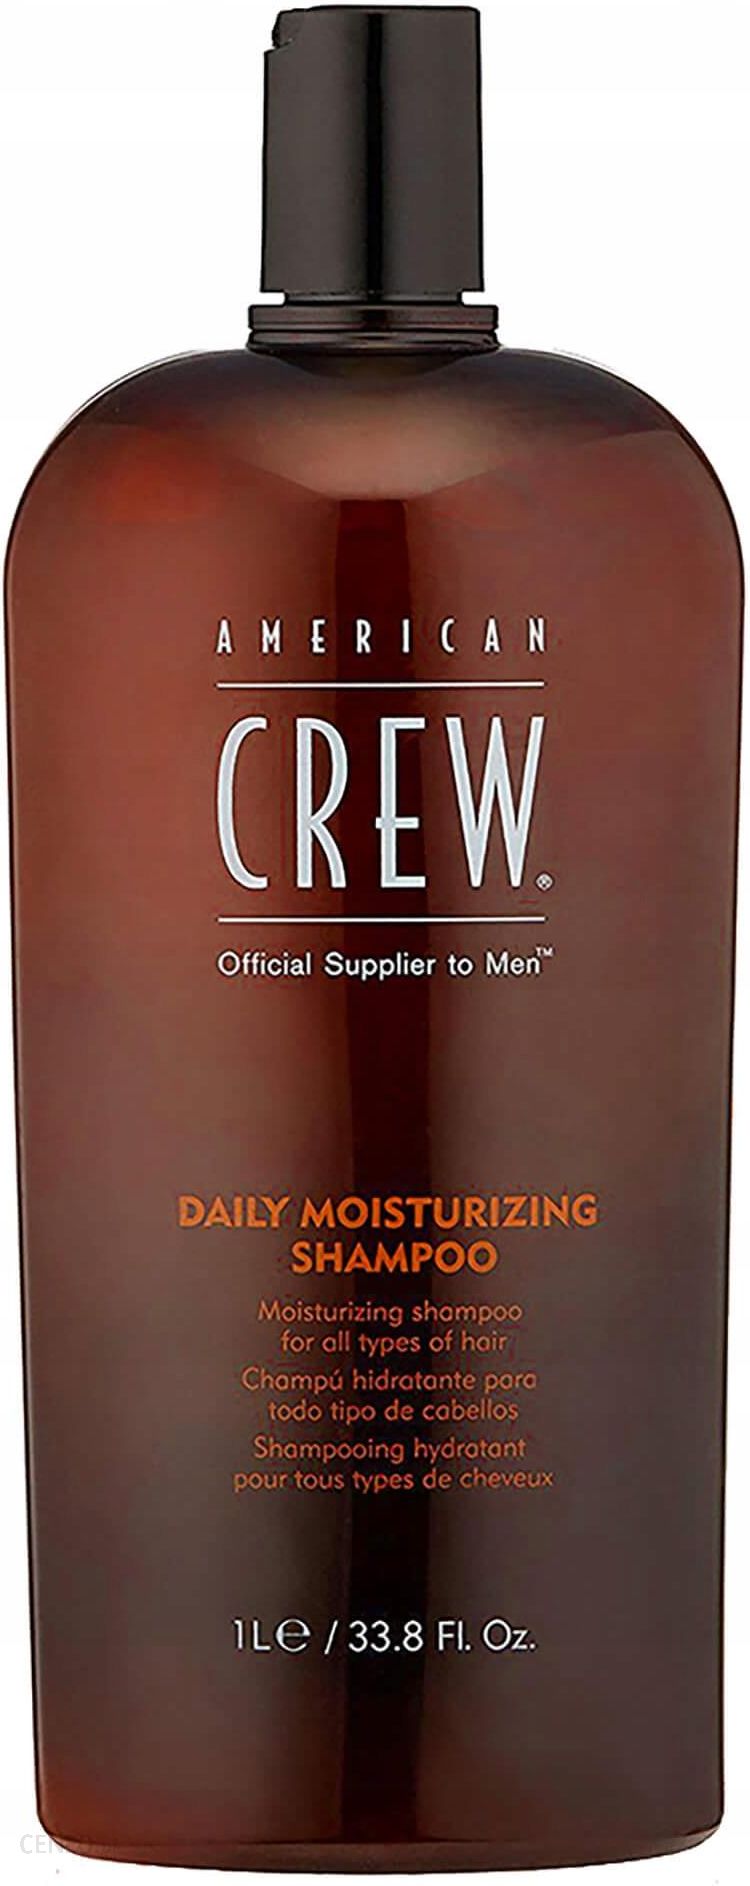 american crew szampon opinie